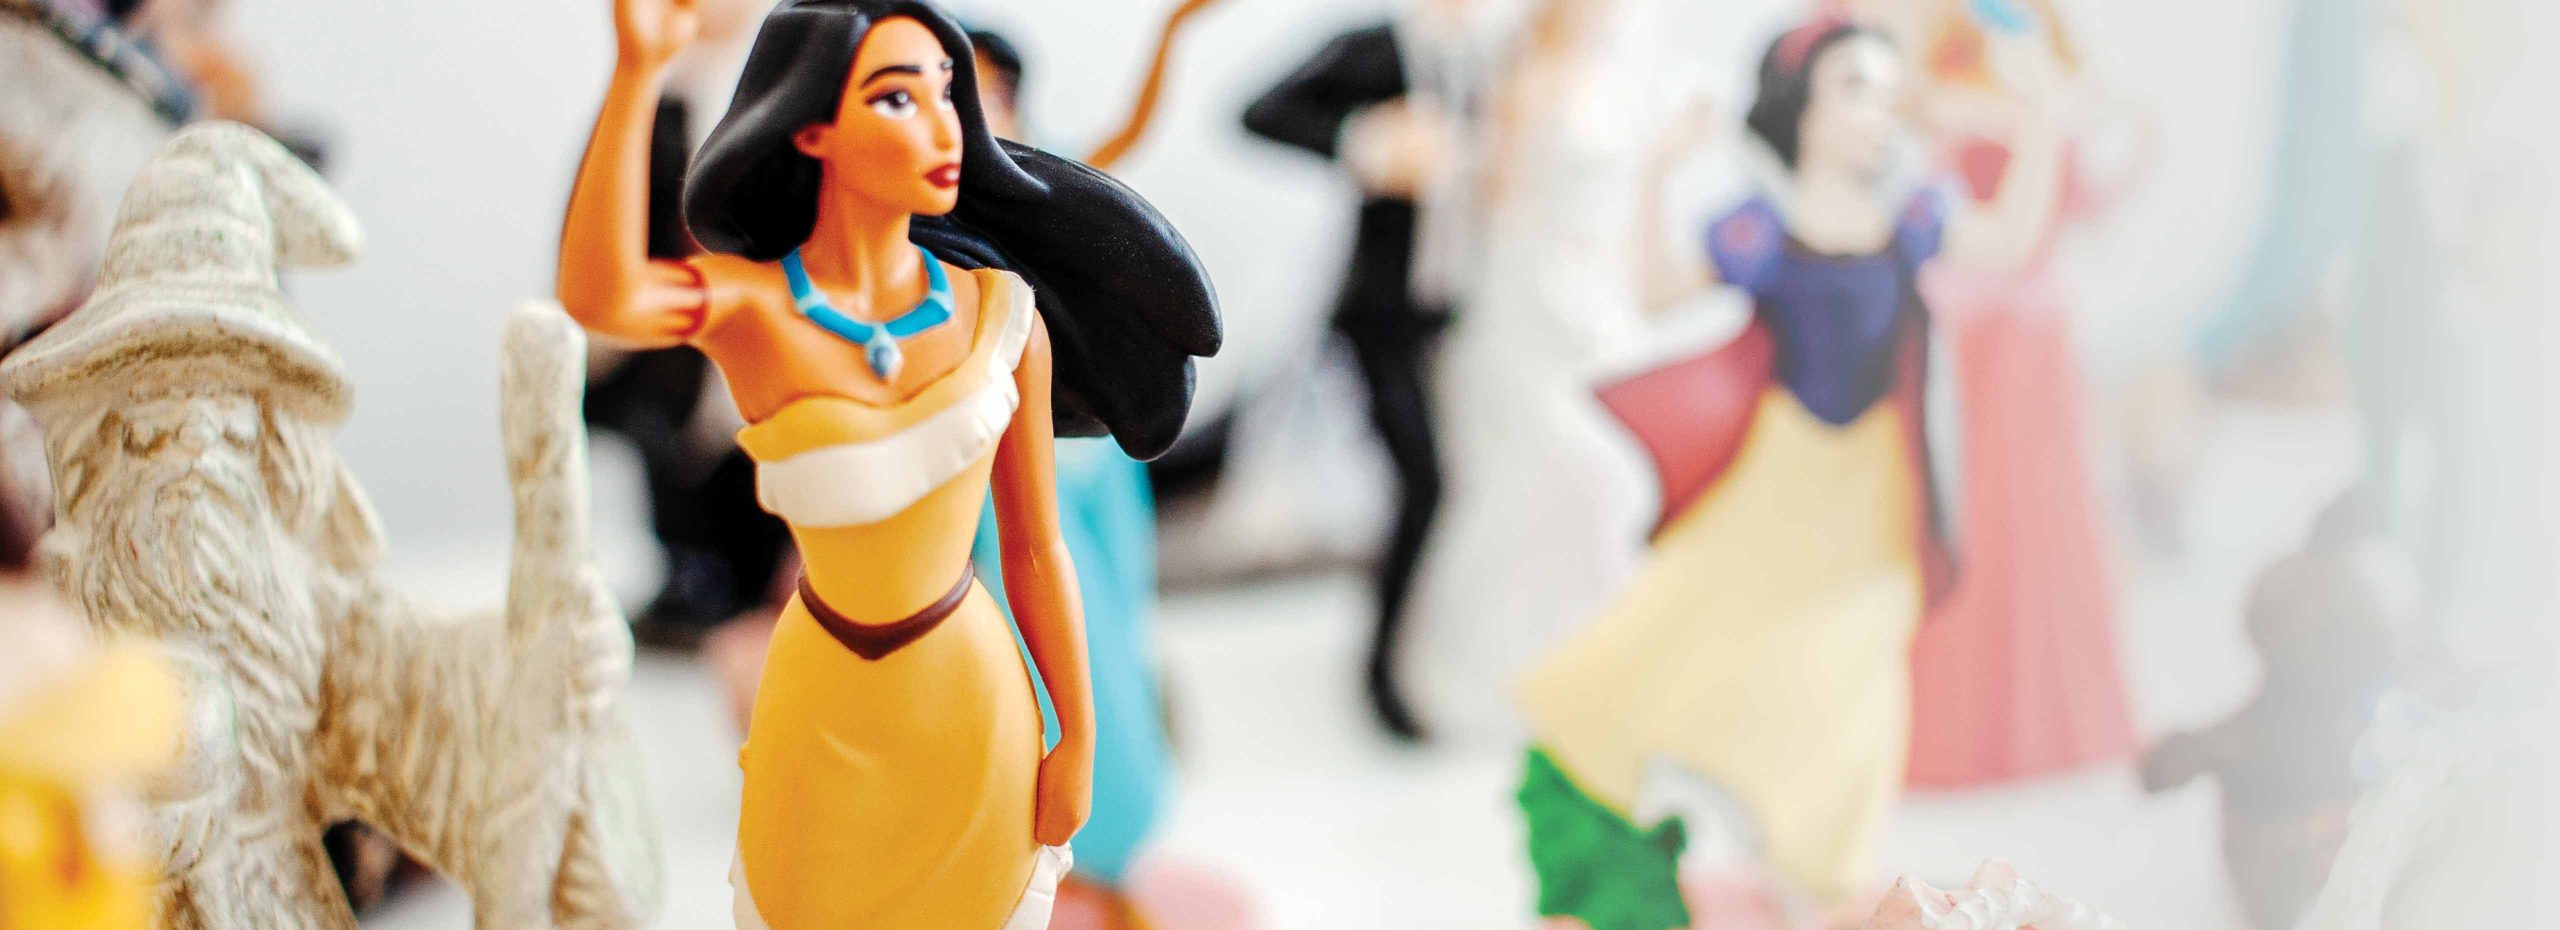 Various toy figures including Disneys Pocahontas and Snow White